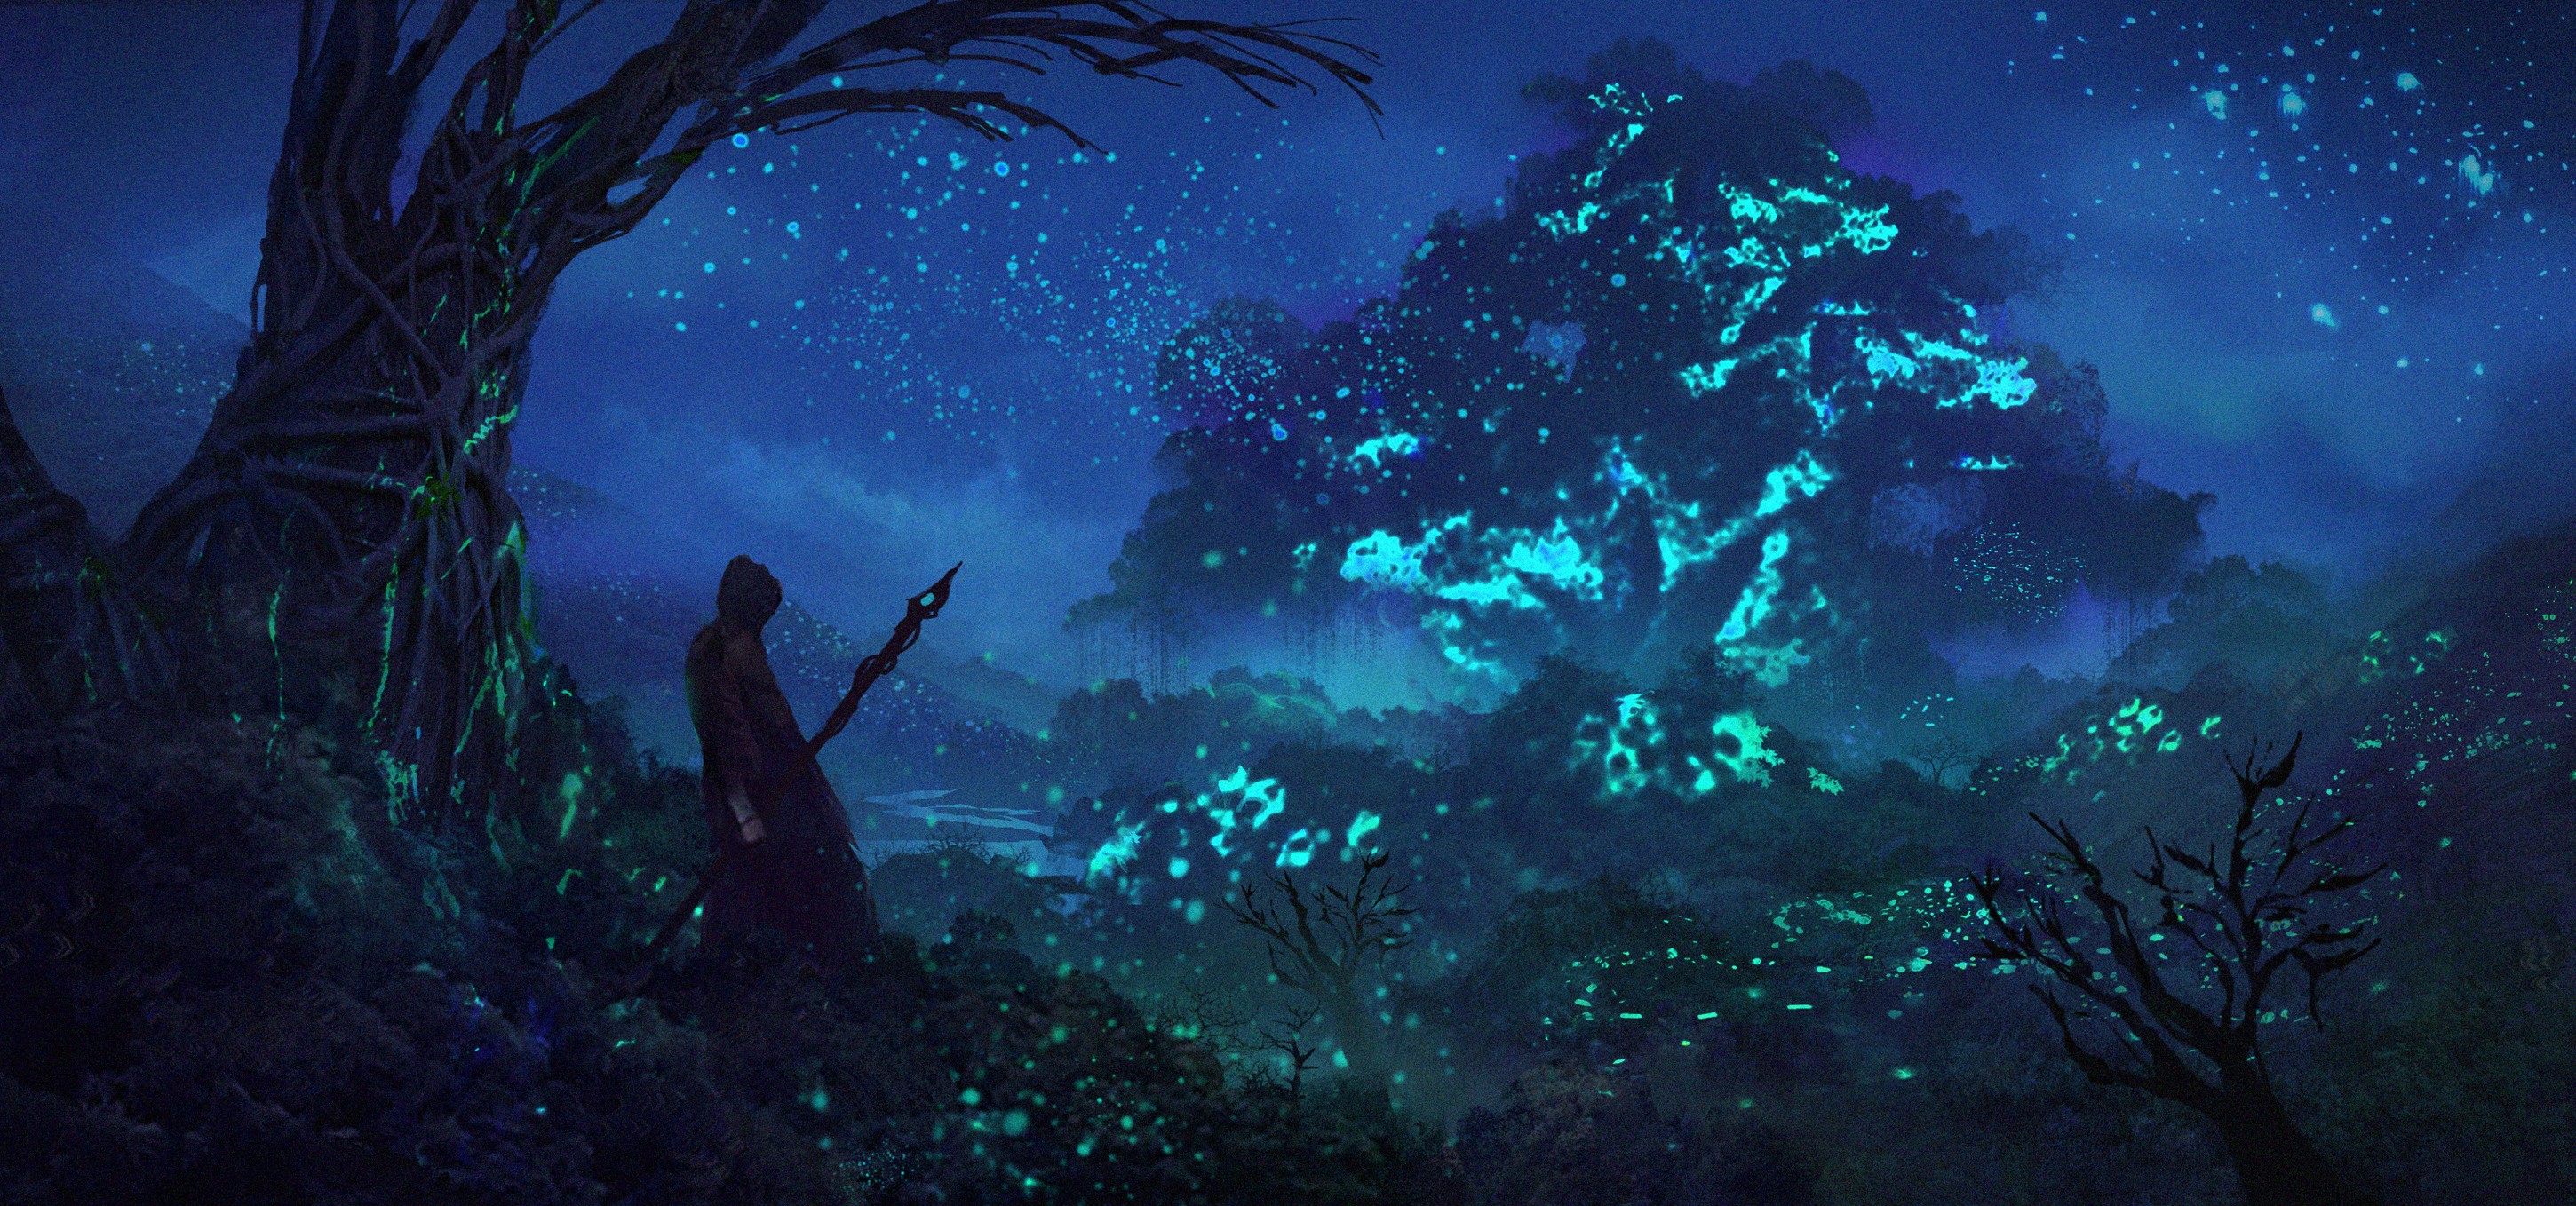 #night, #warrior, #trees, #blue, #fantasy art, #magic